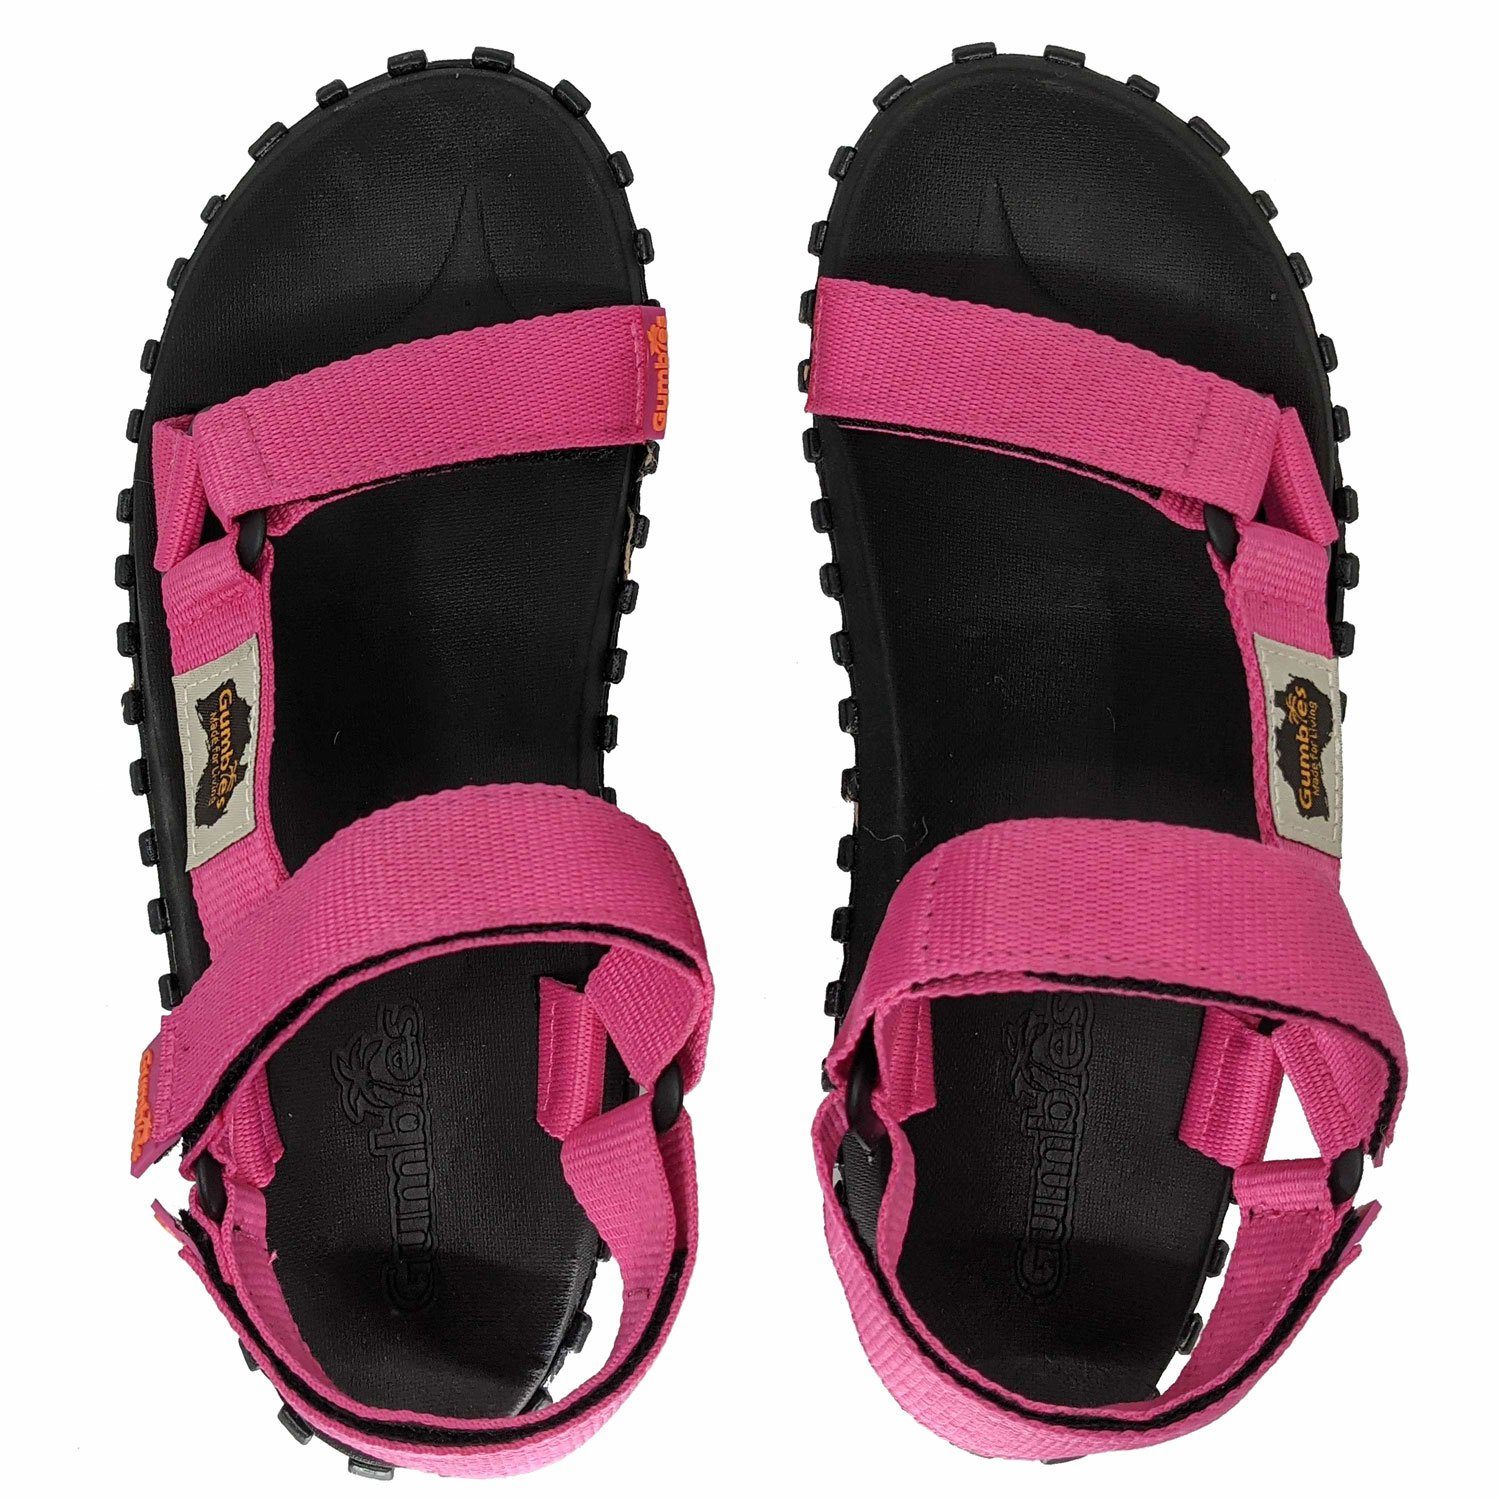 in Materialien Sandalette aus Gumbies Pink Scrambler recycelten »in farbenfrohen Designs«